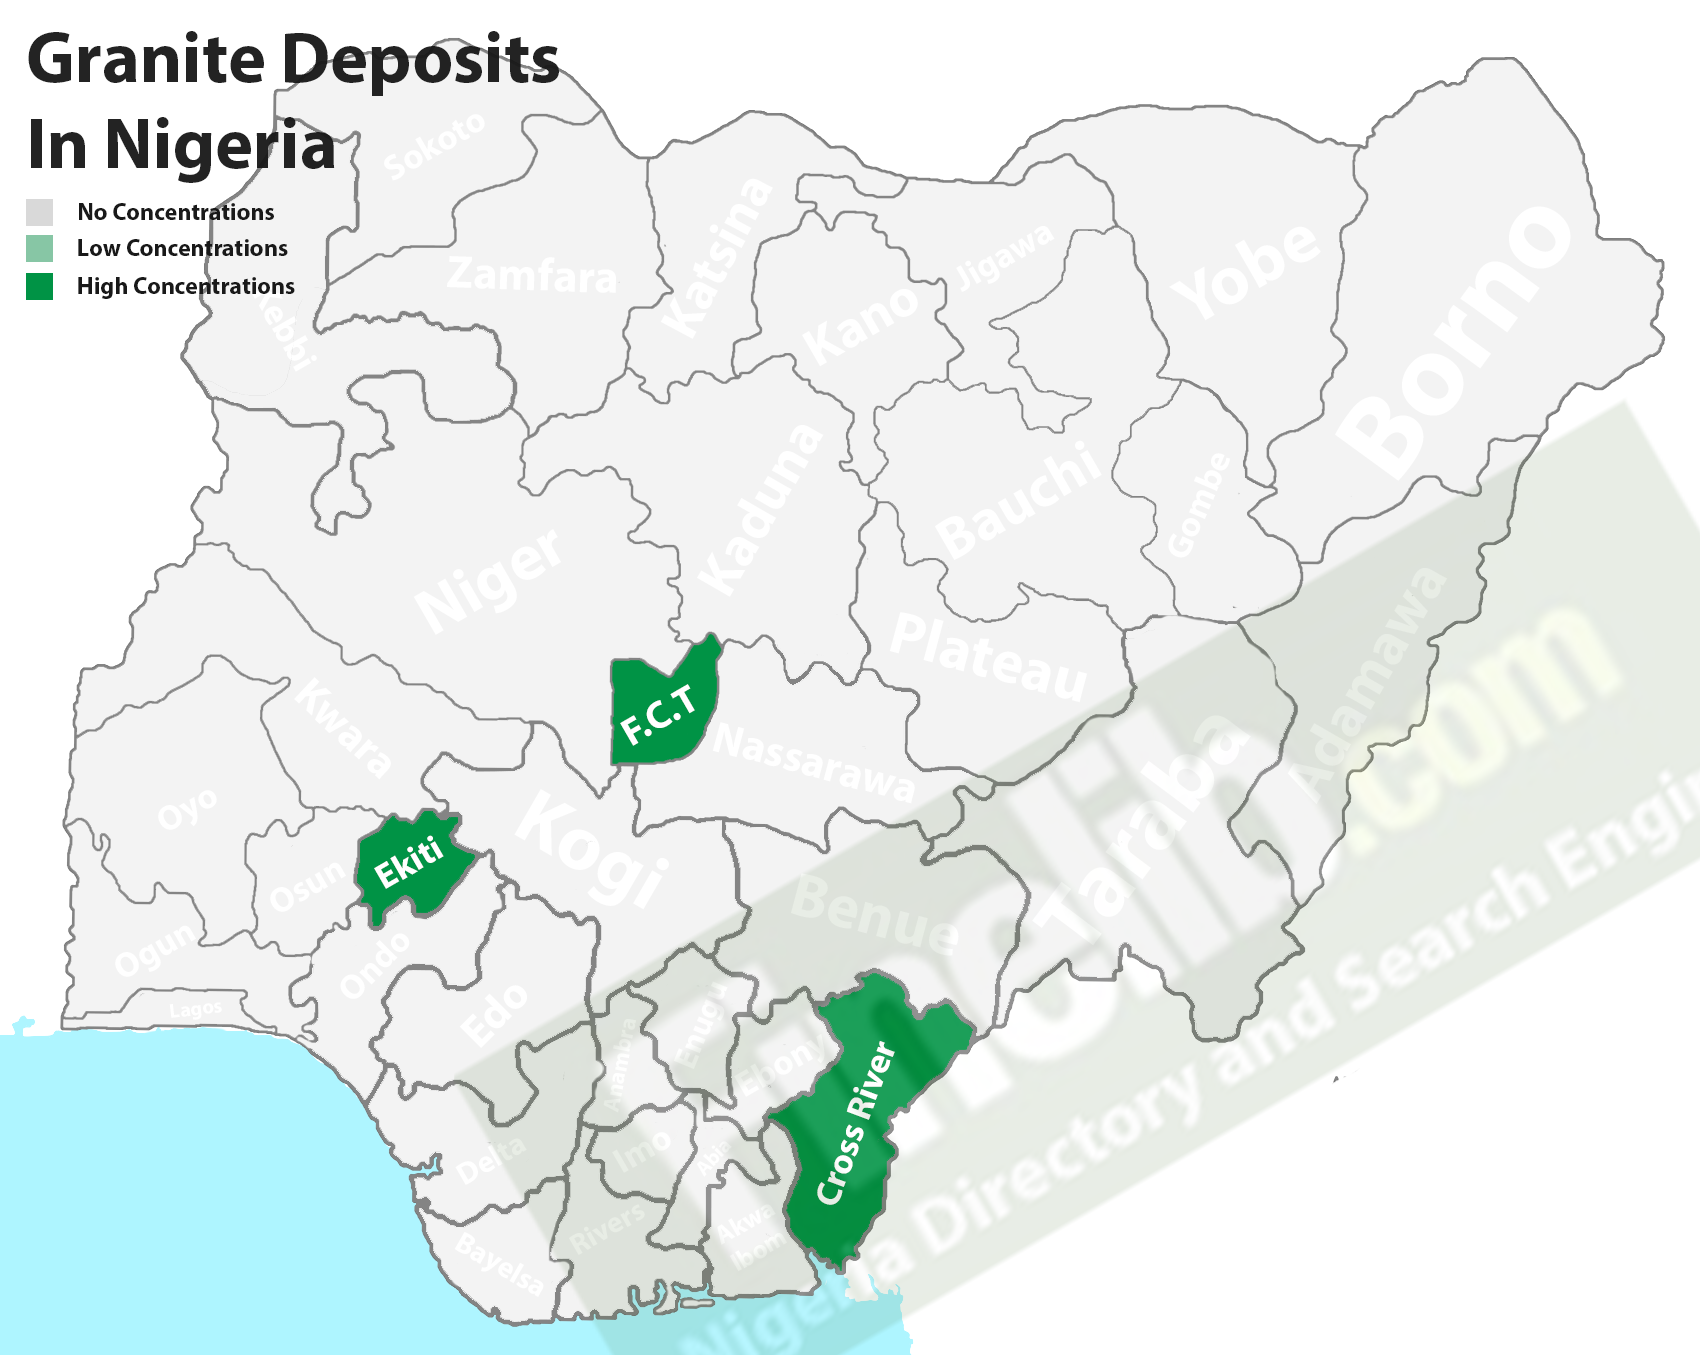 Granite deposits in Nigeria